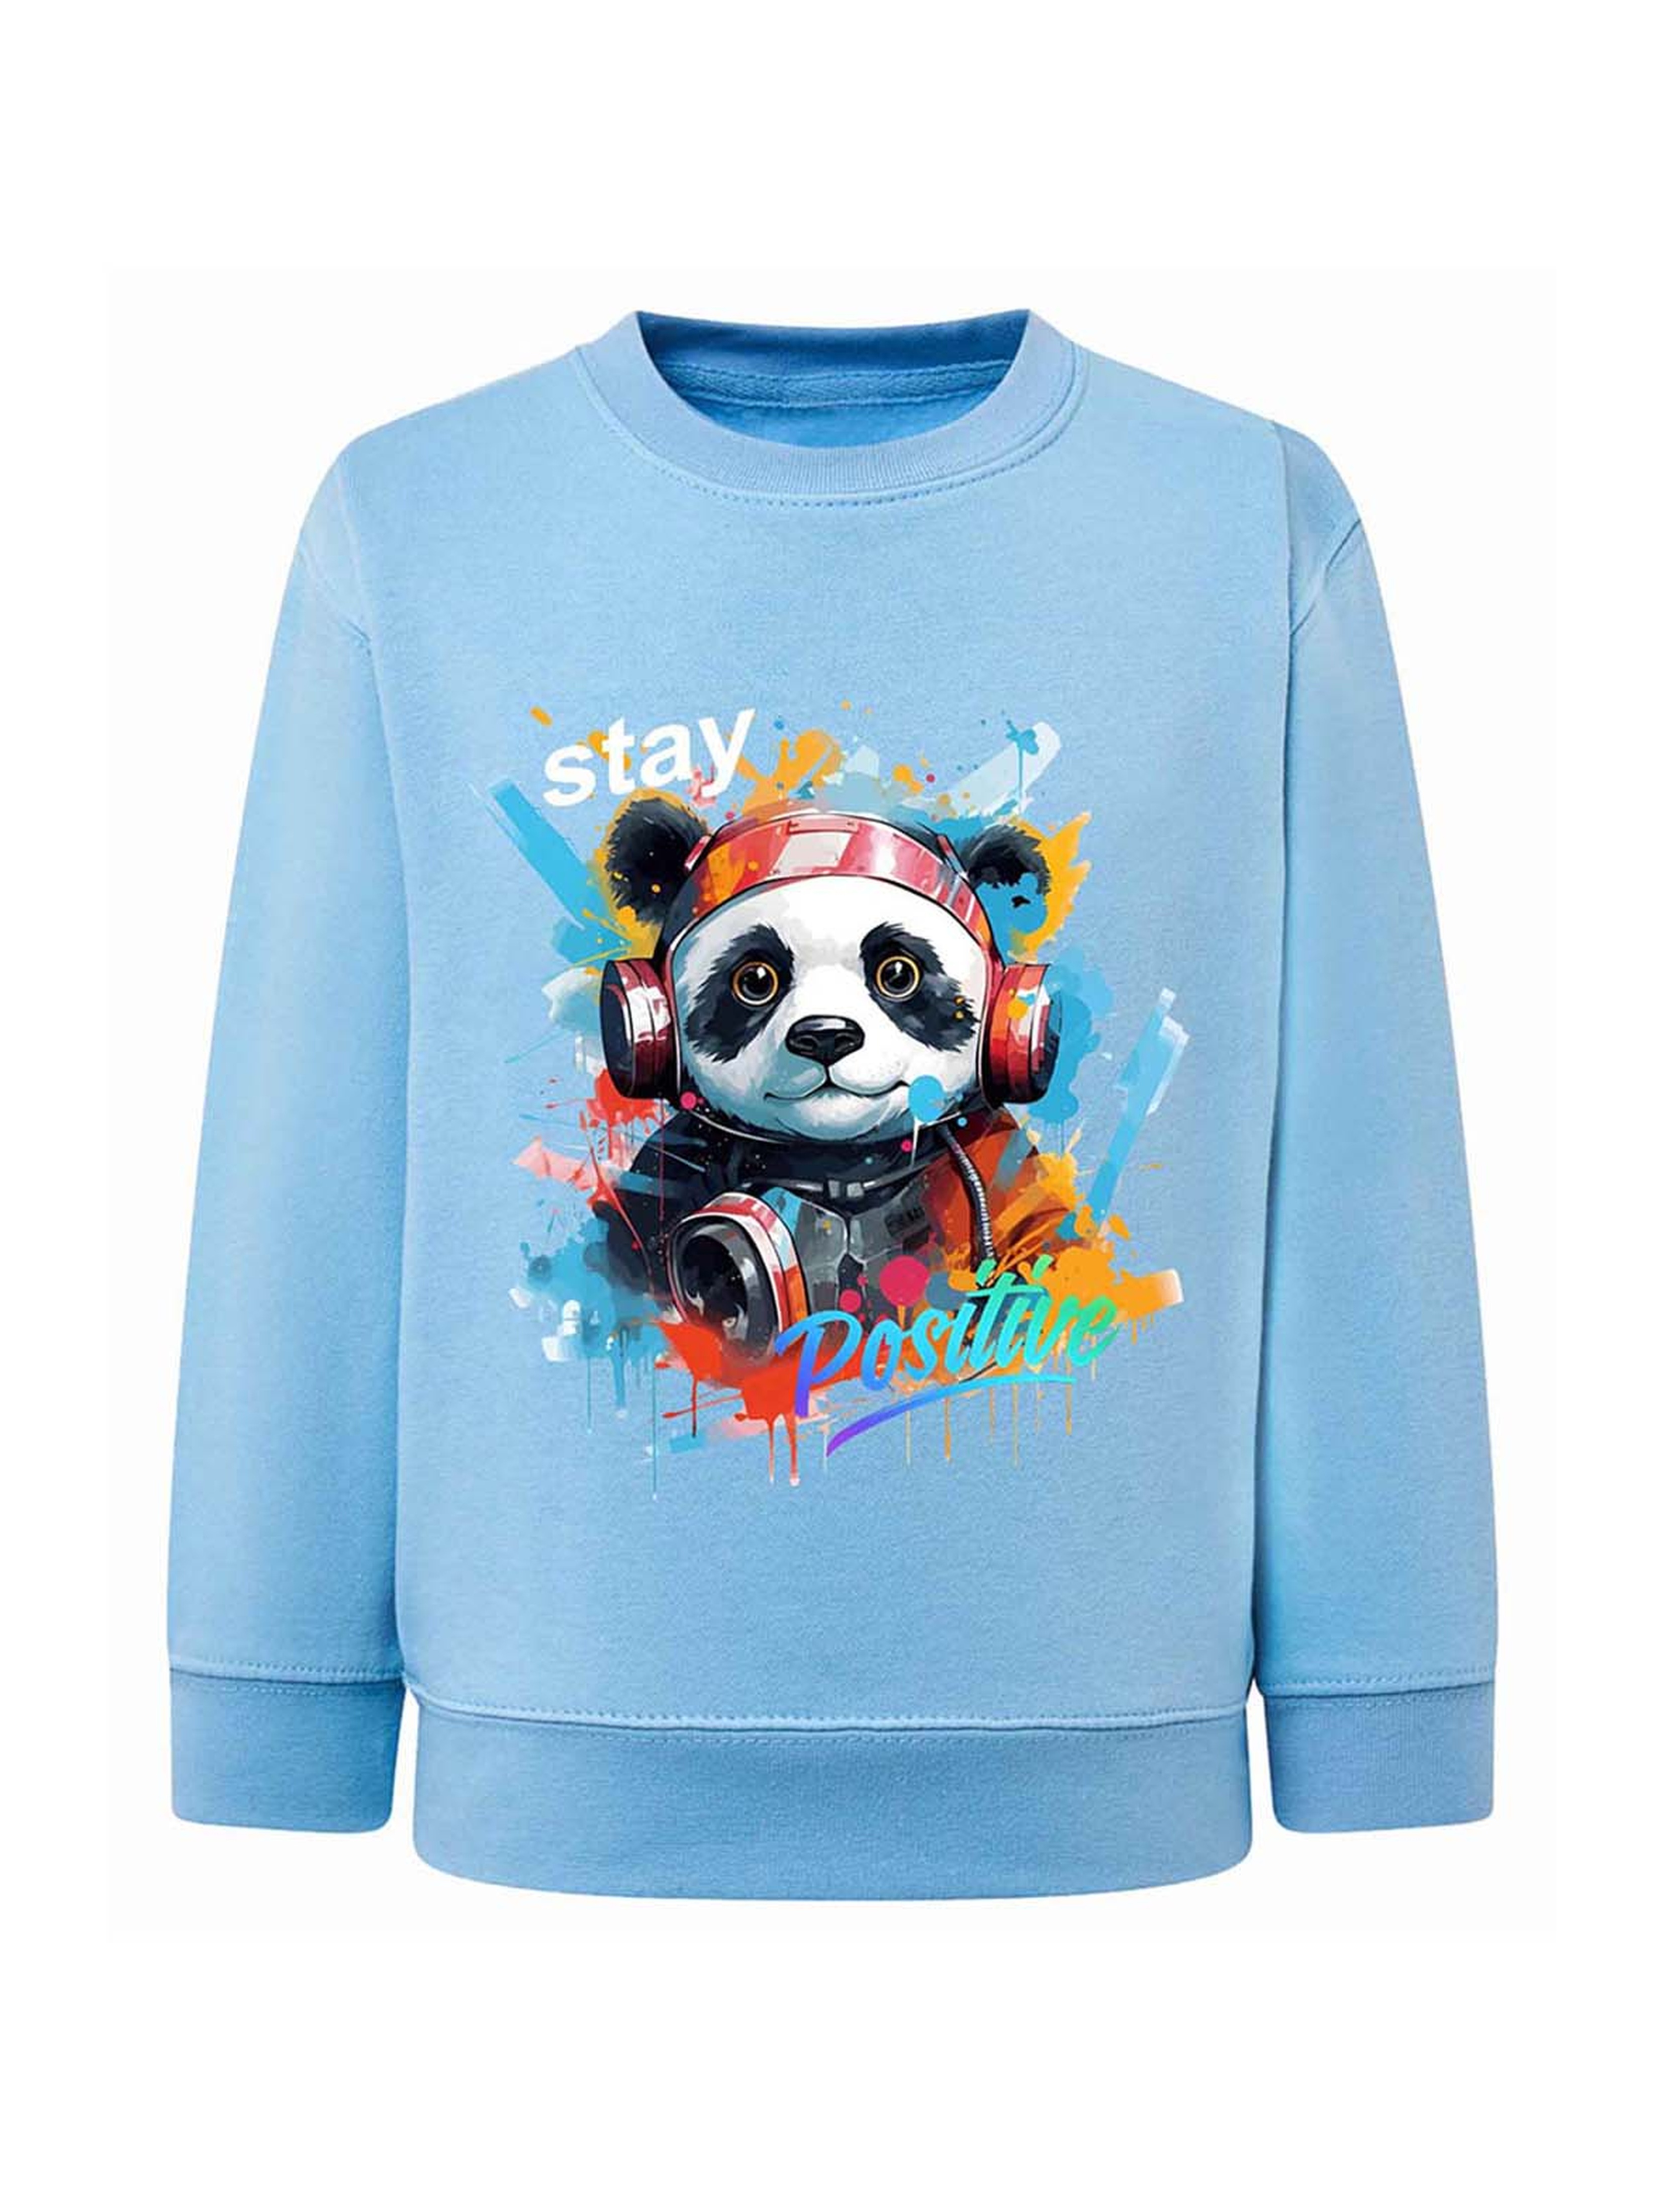 Błękitna chłopięca bluza z nadrukiem - Panda